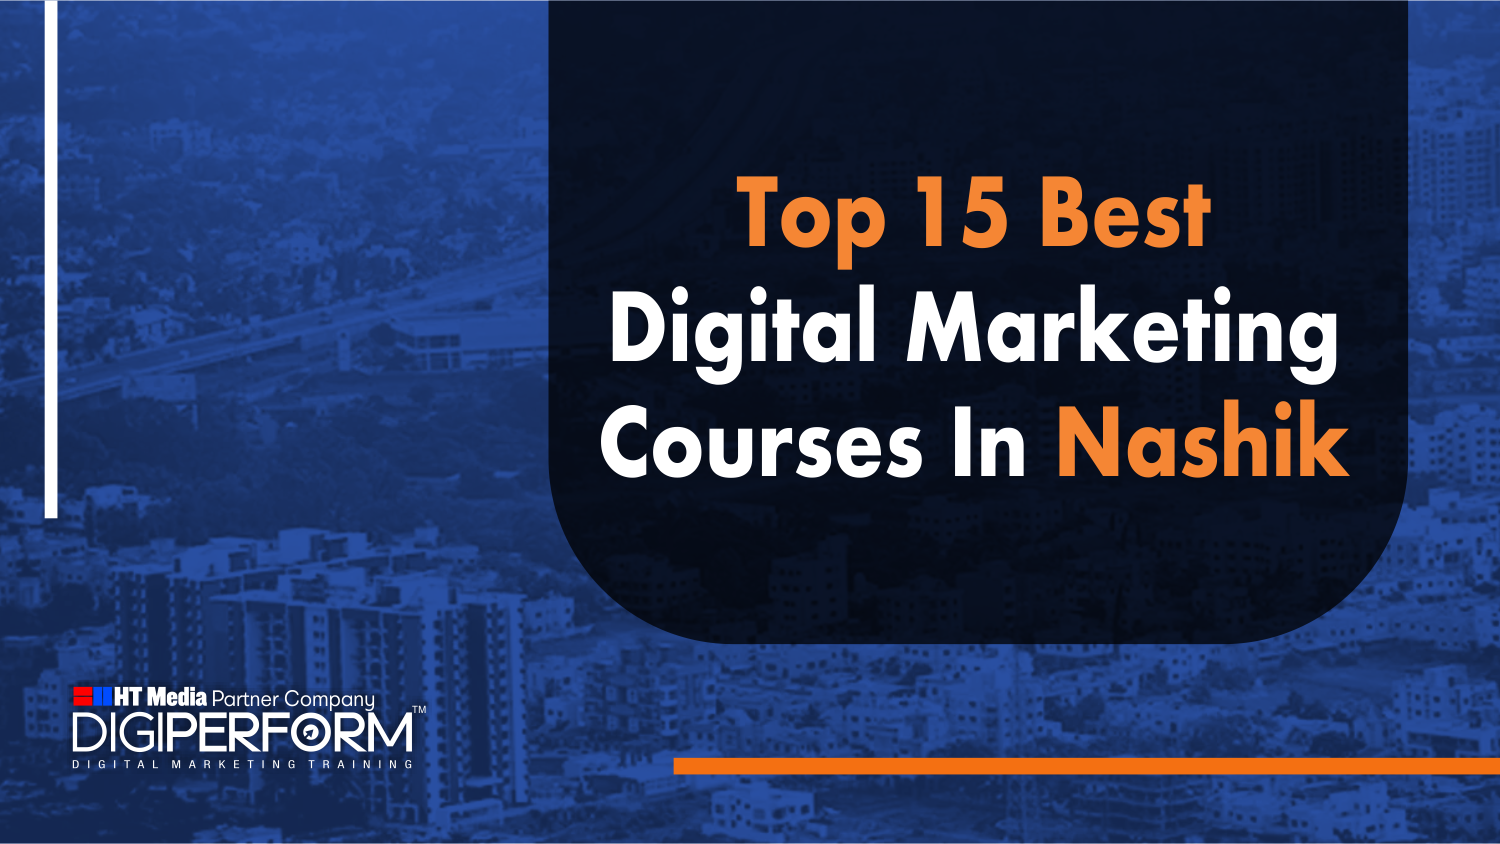 Top 15 Best Digital Marketing Courses In Nashik